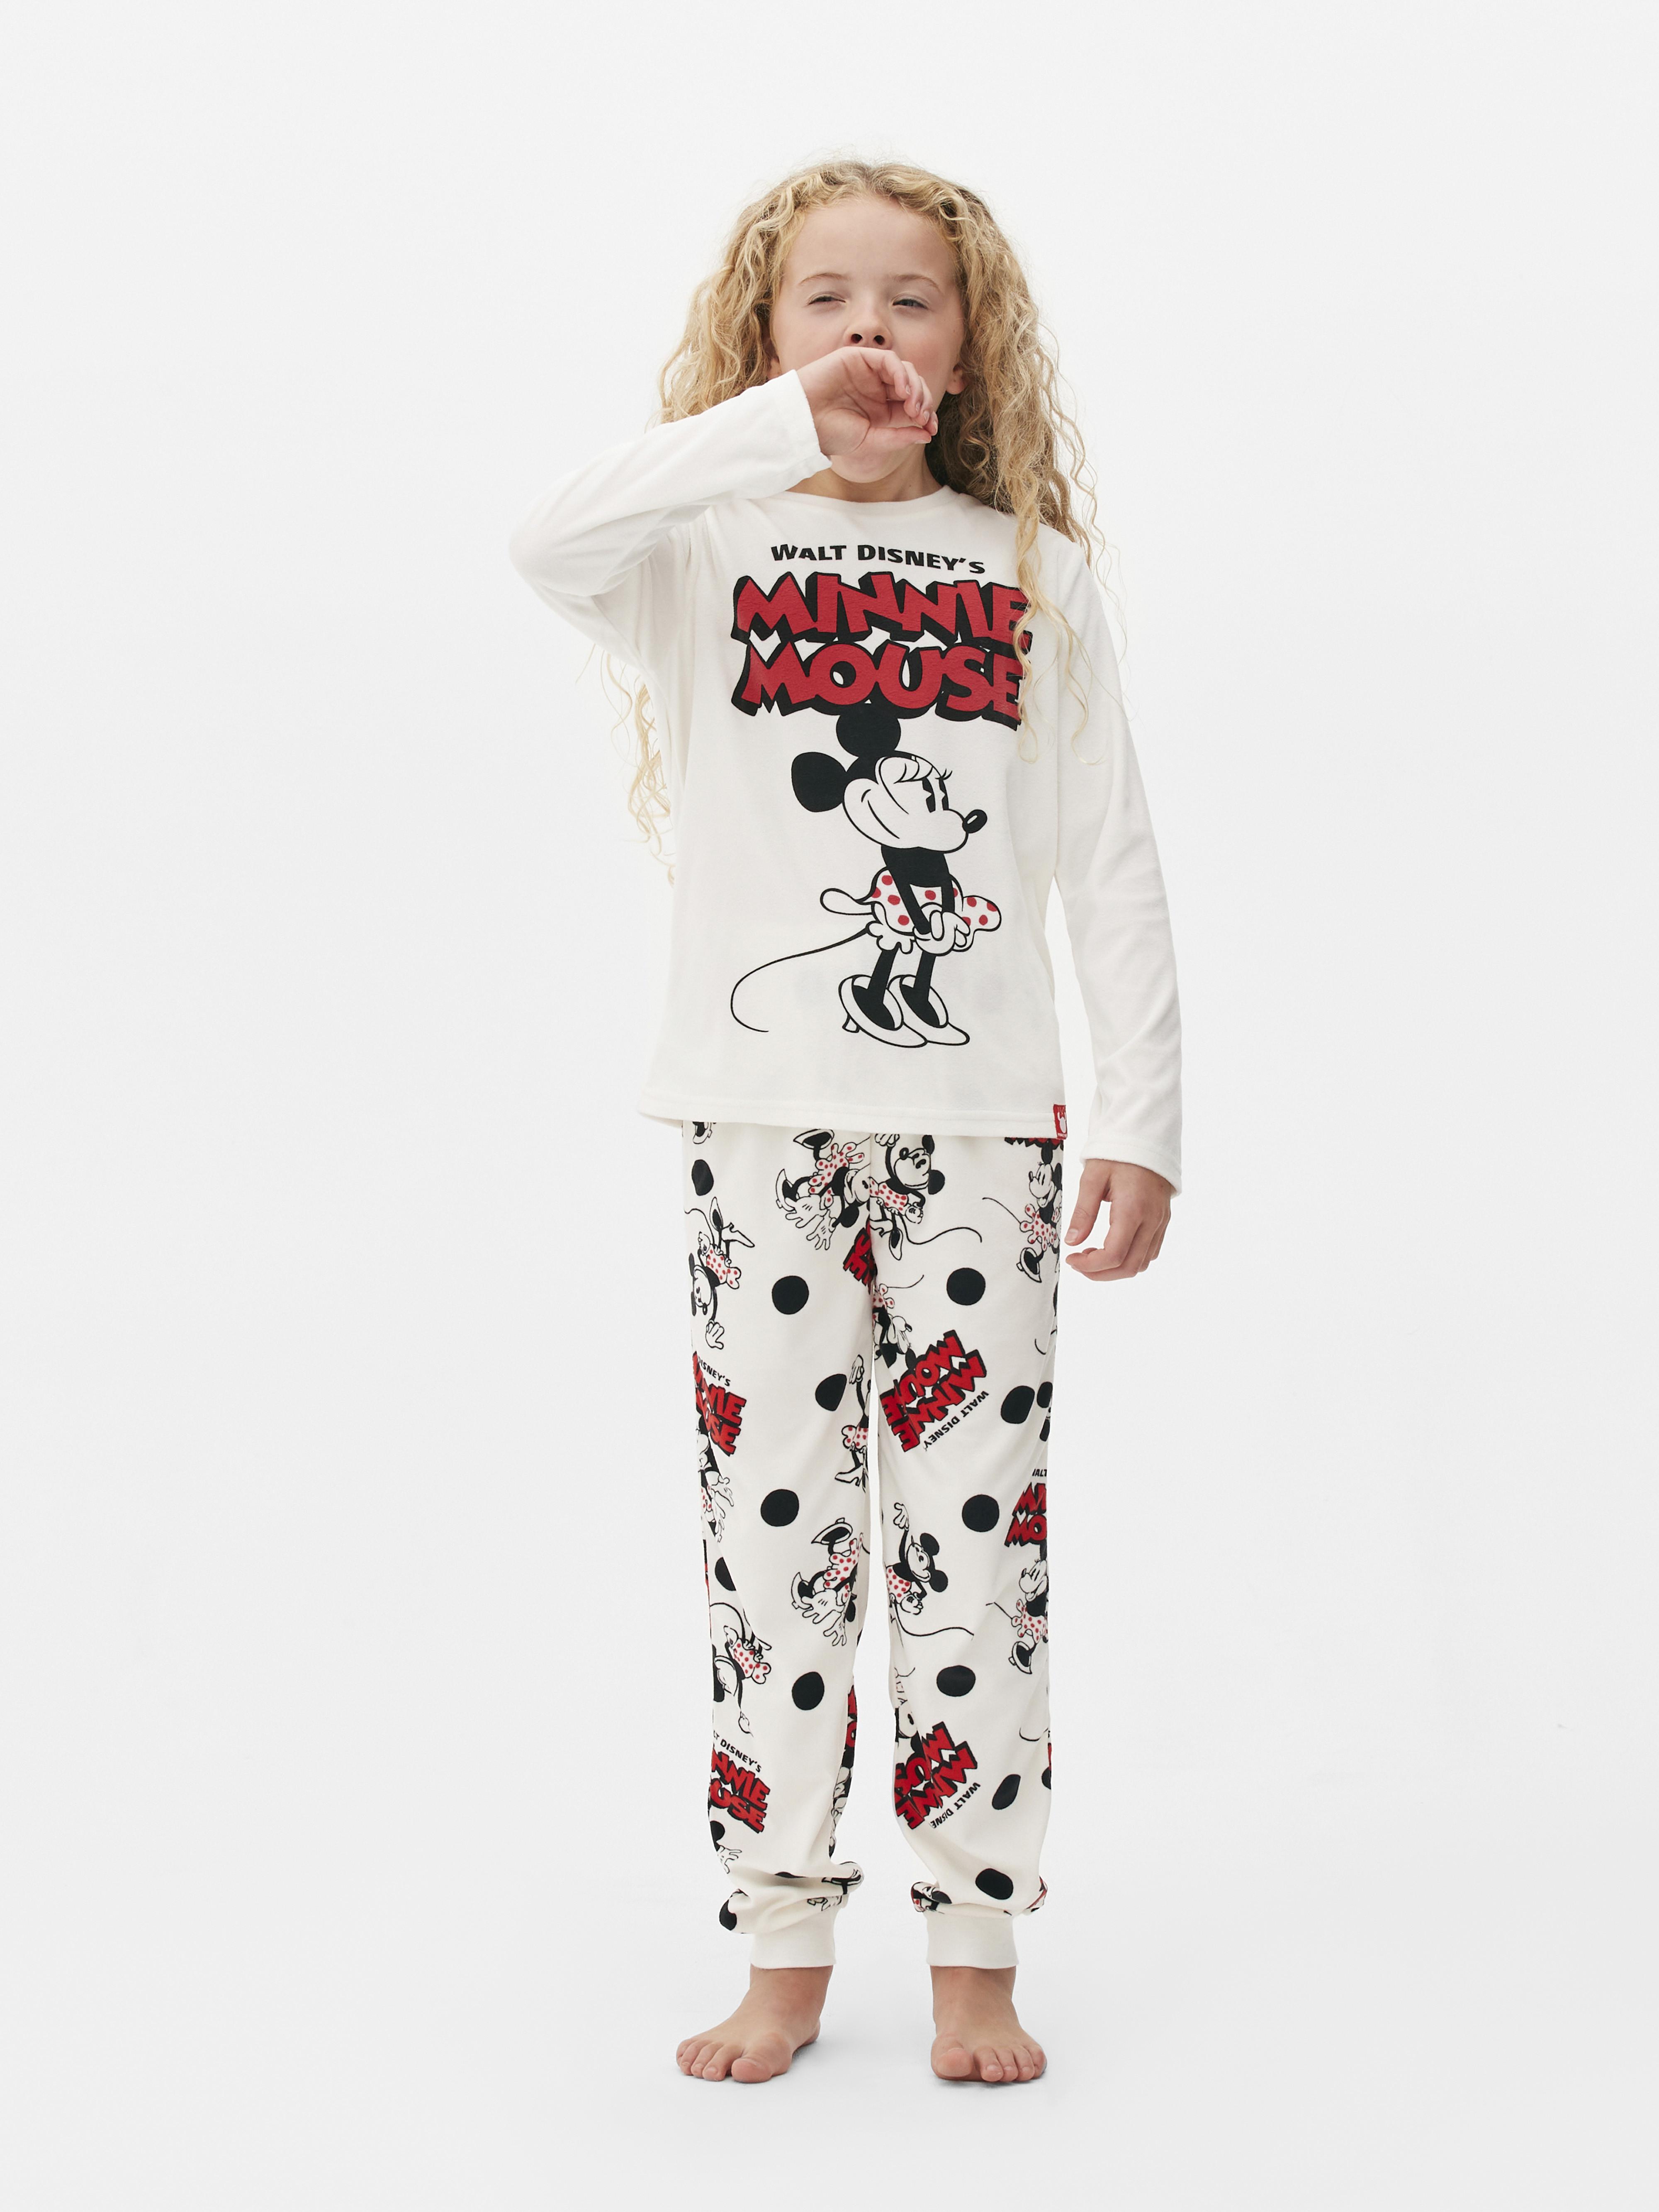 Disney's Minnie Mouse Vintage Pyjama Set